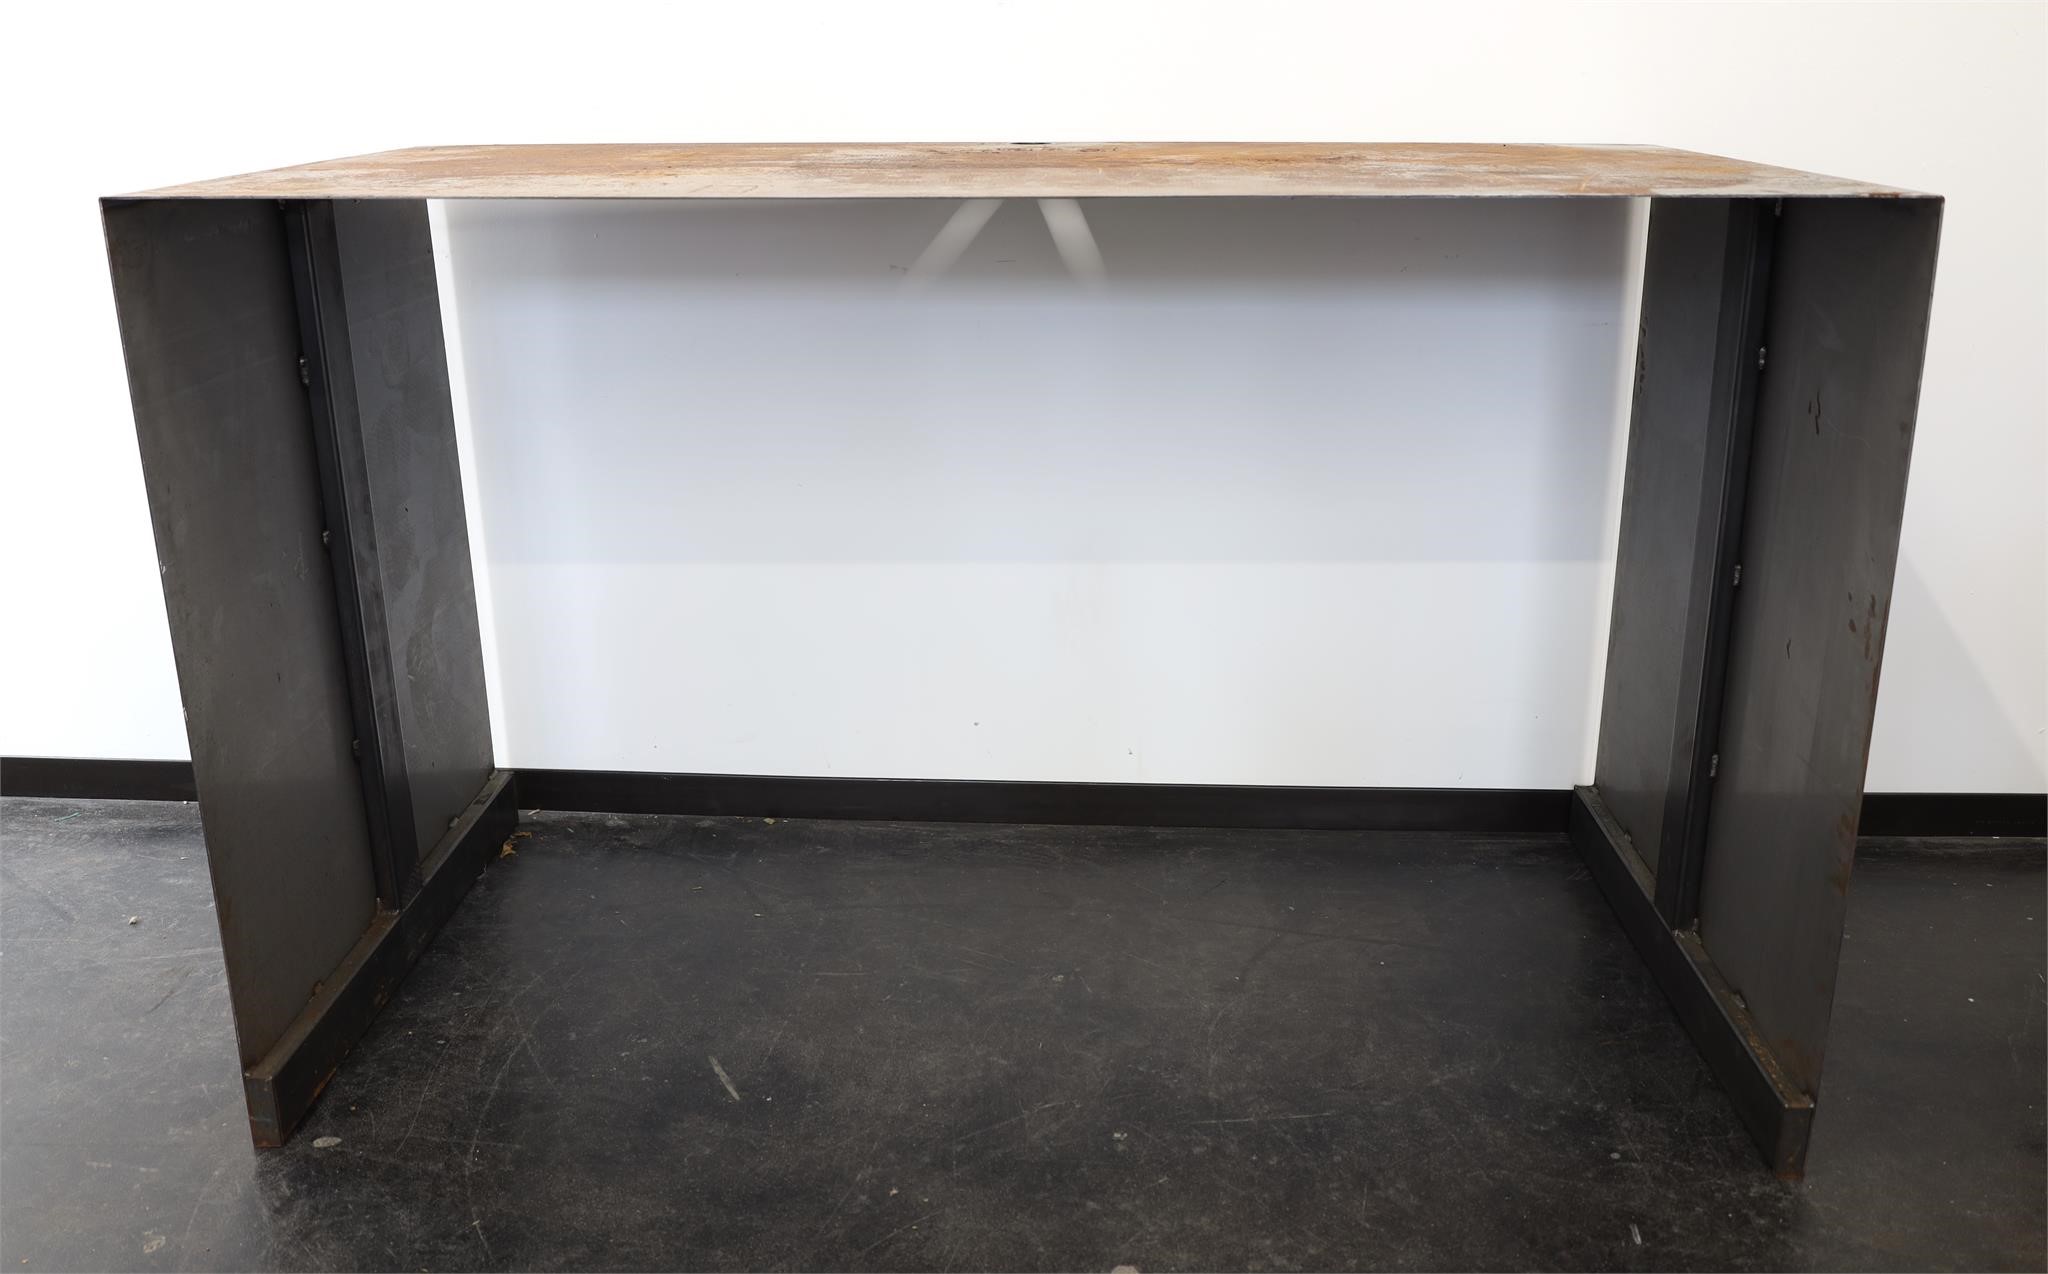 Custom Fabricated Steel Desk by Tobeto Designs